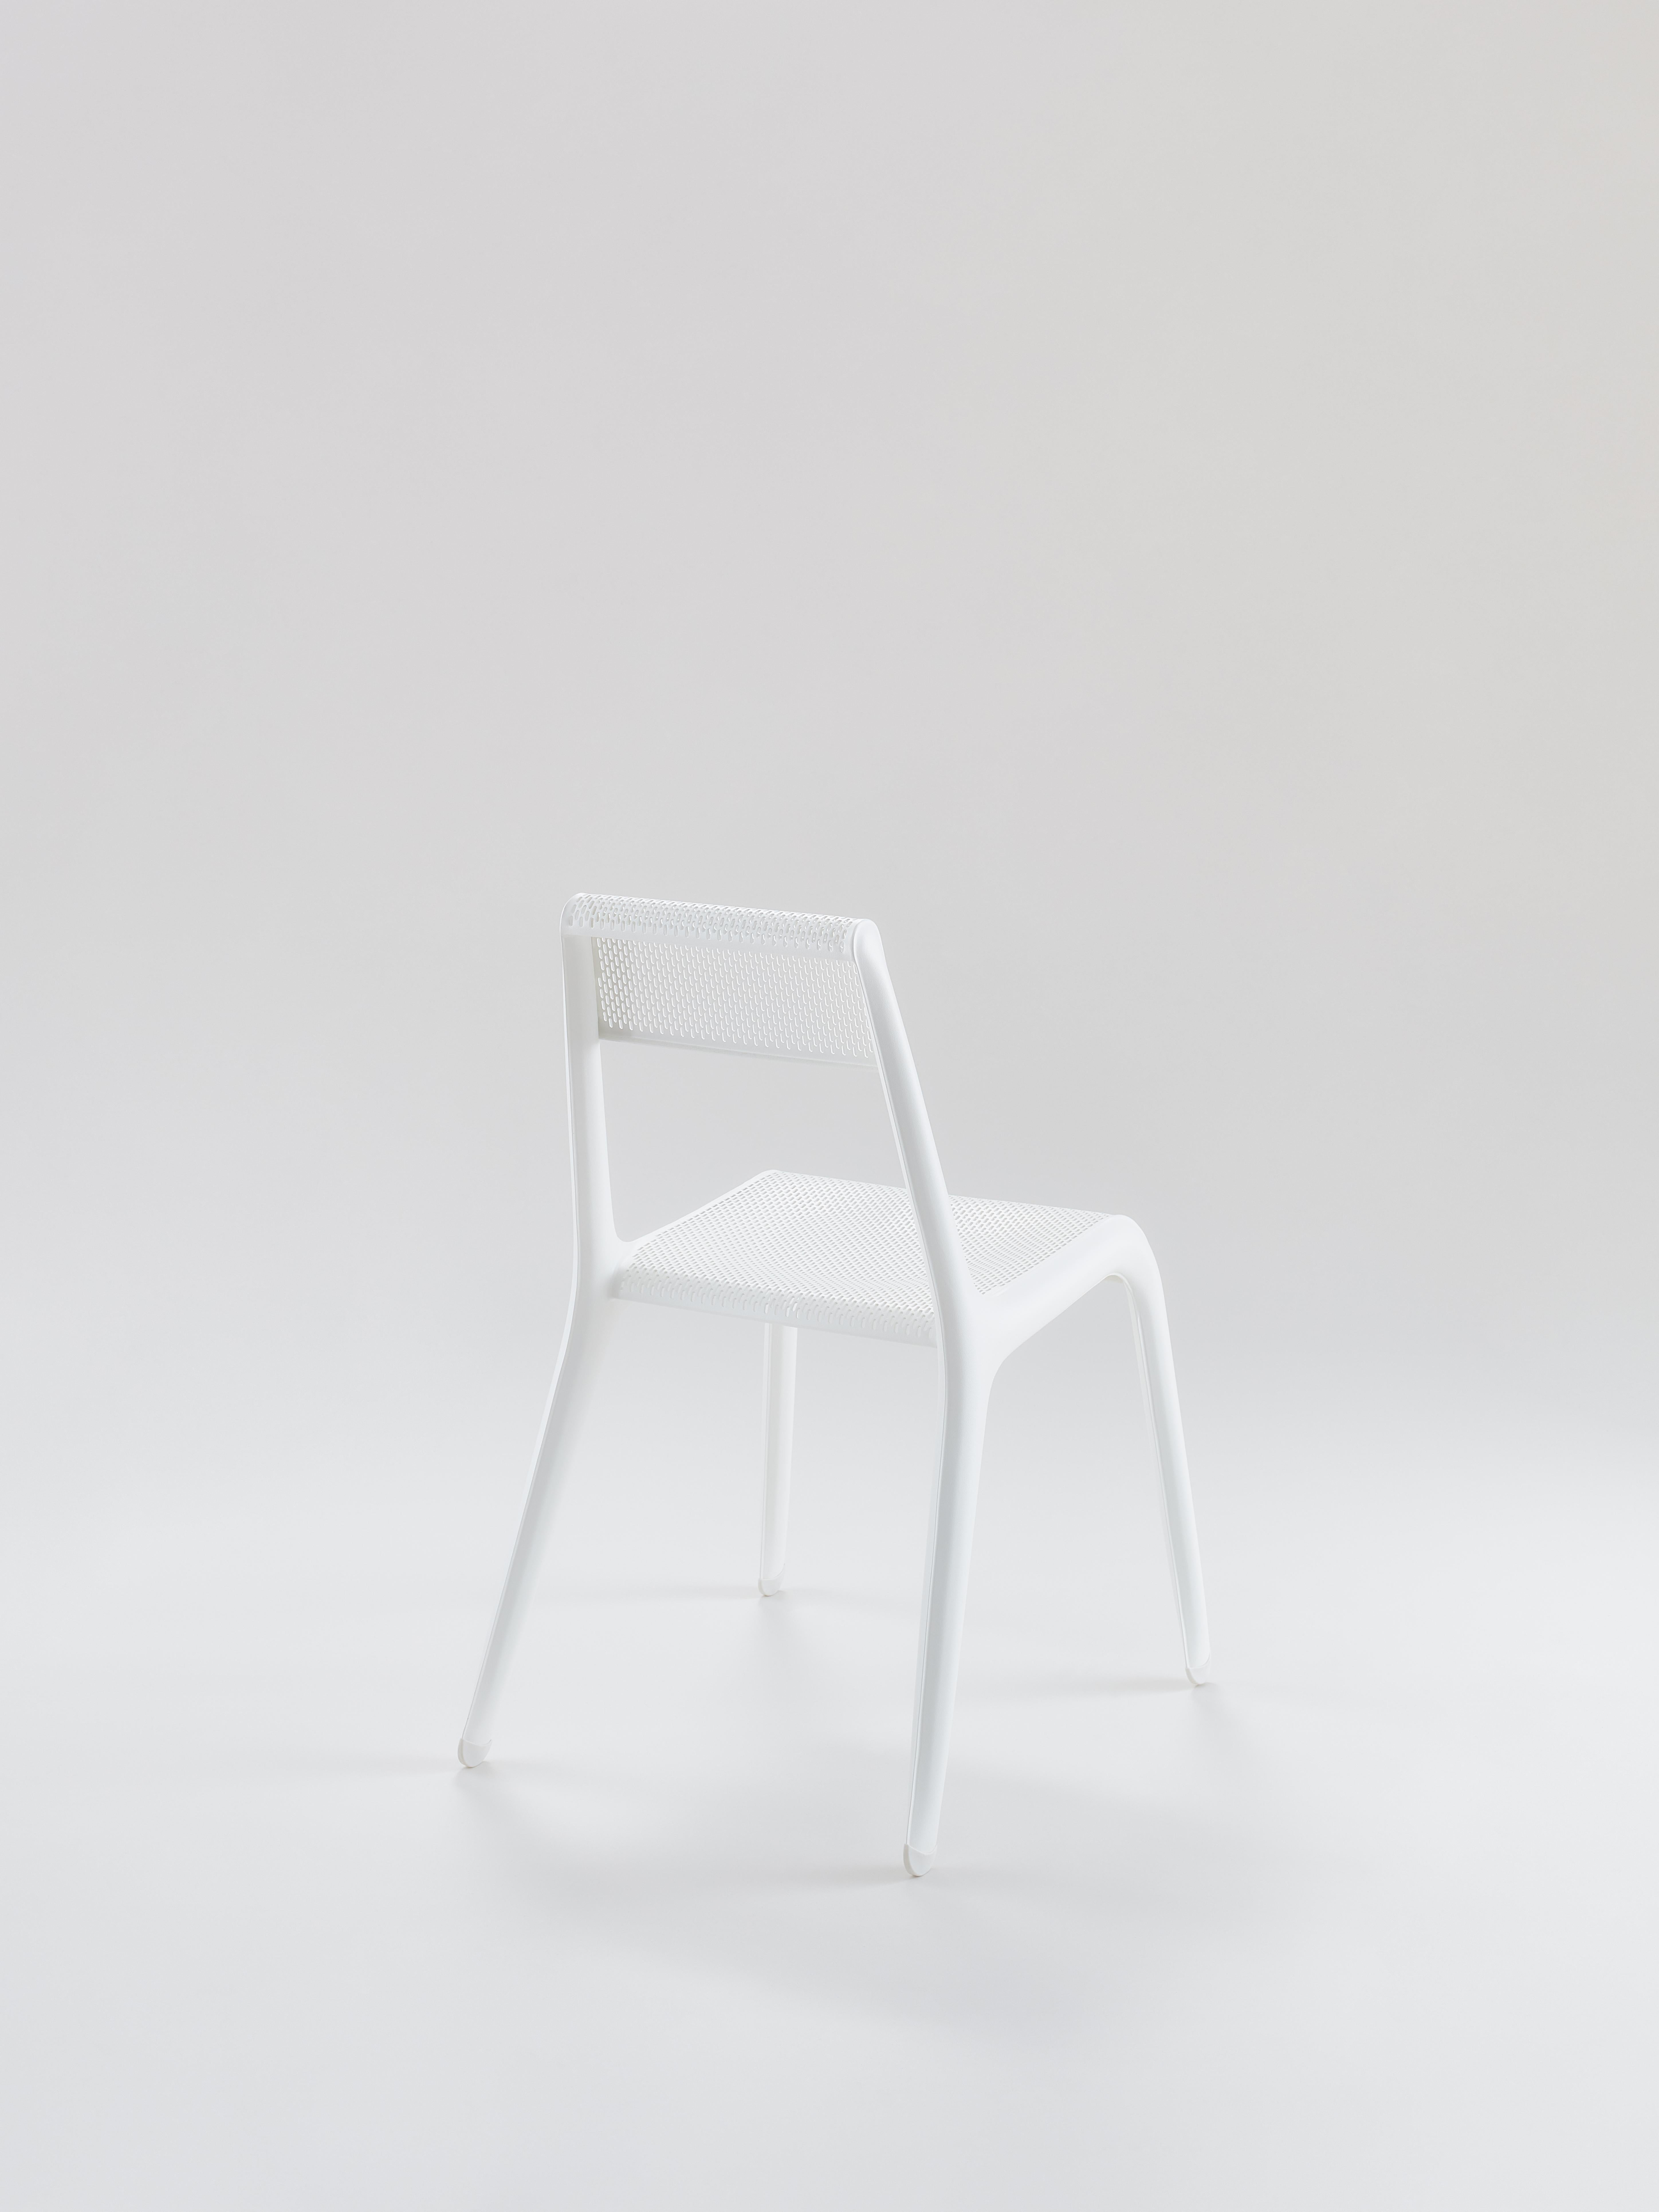 Organic Modern White Matt Ultraleggera Chair by Zieta For Sale